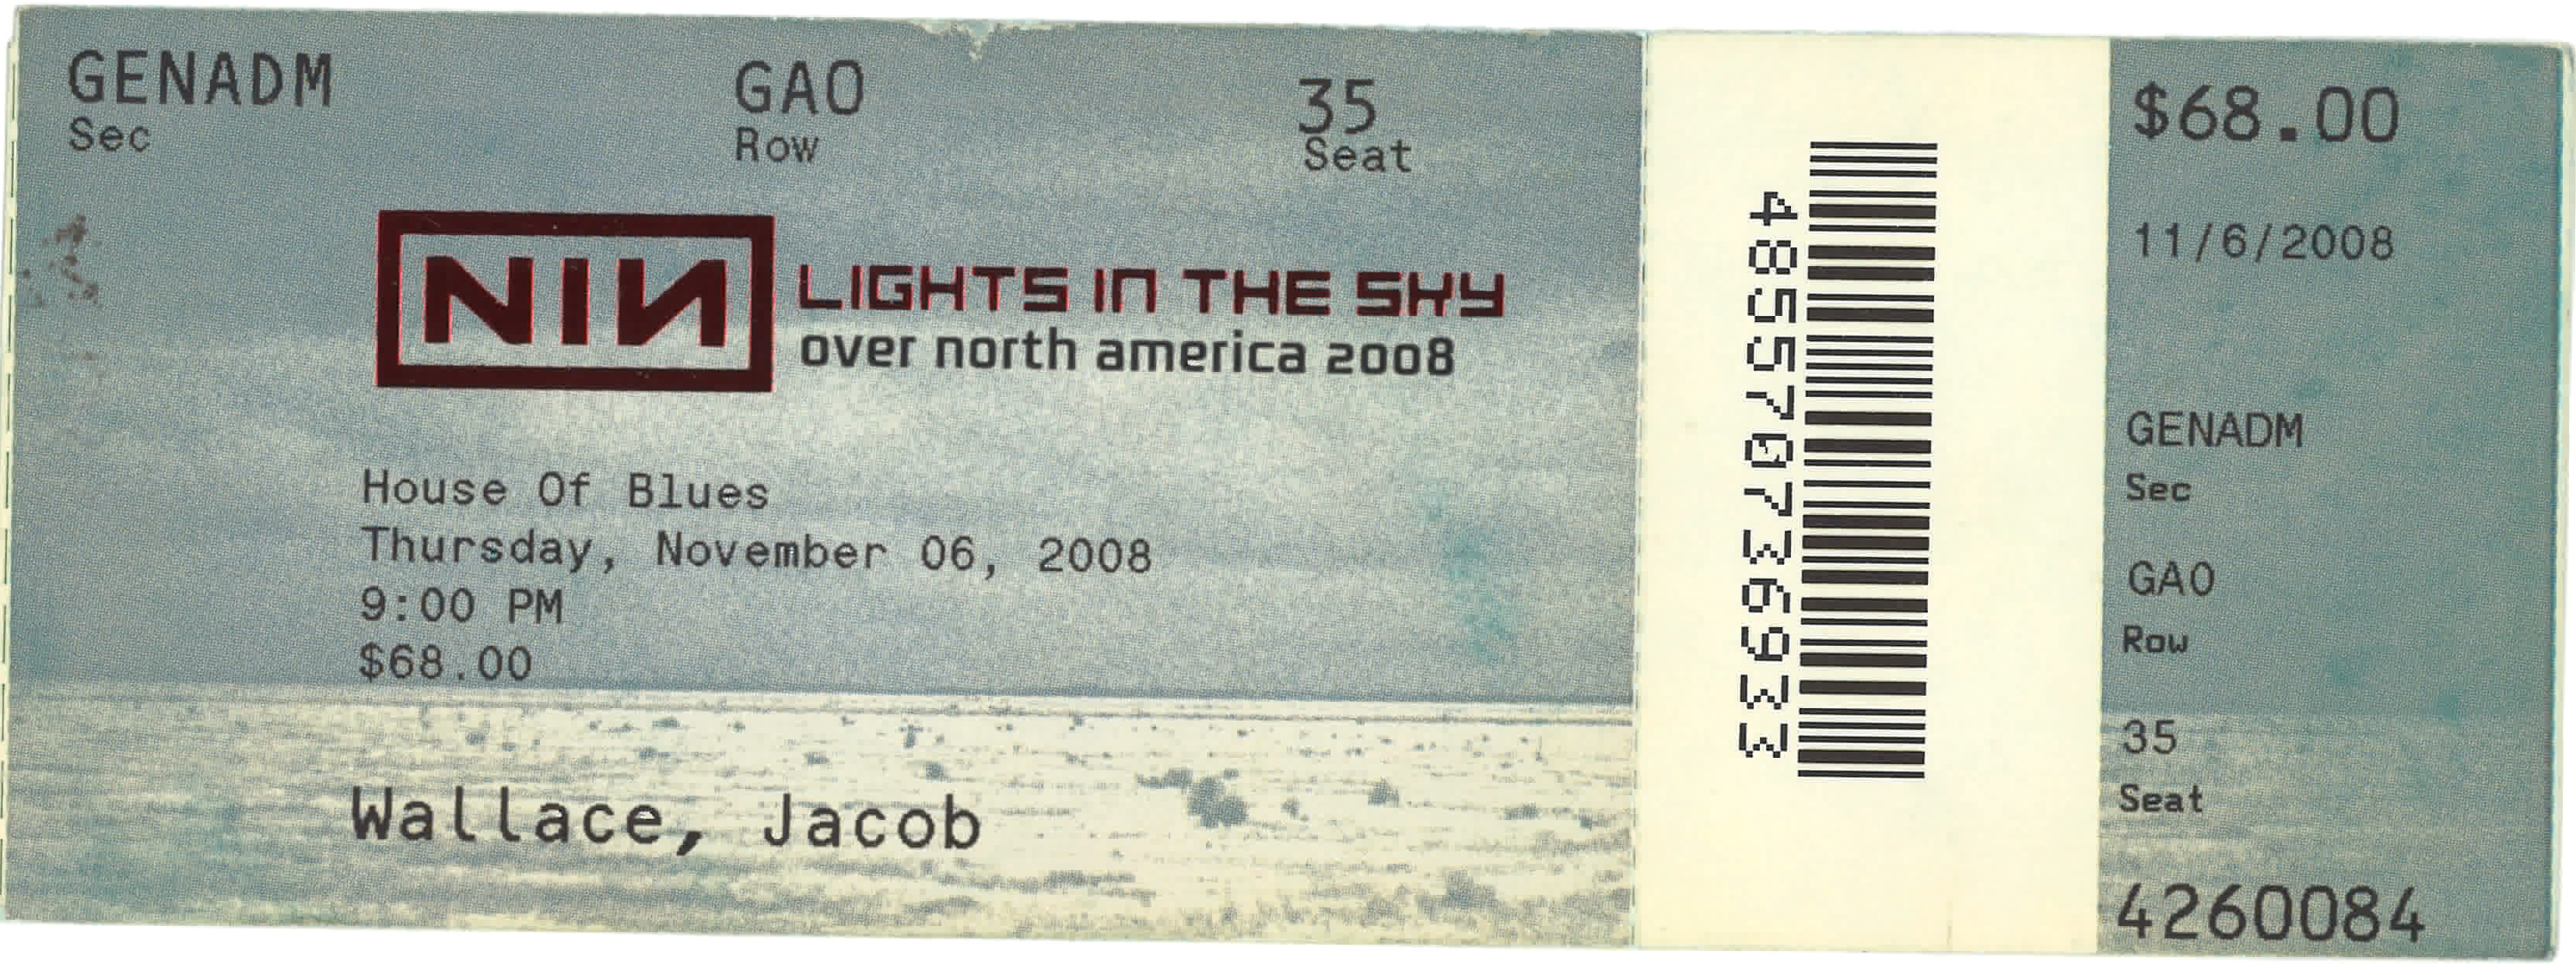 2008/11/06 Ticket